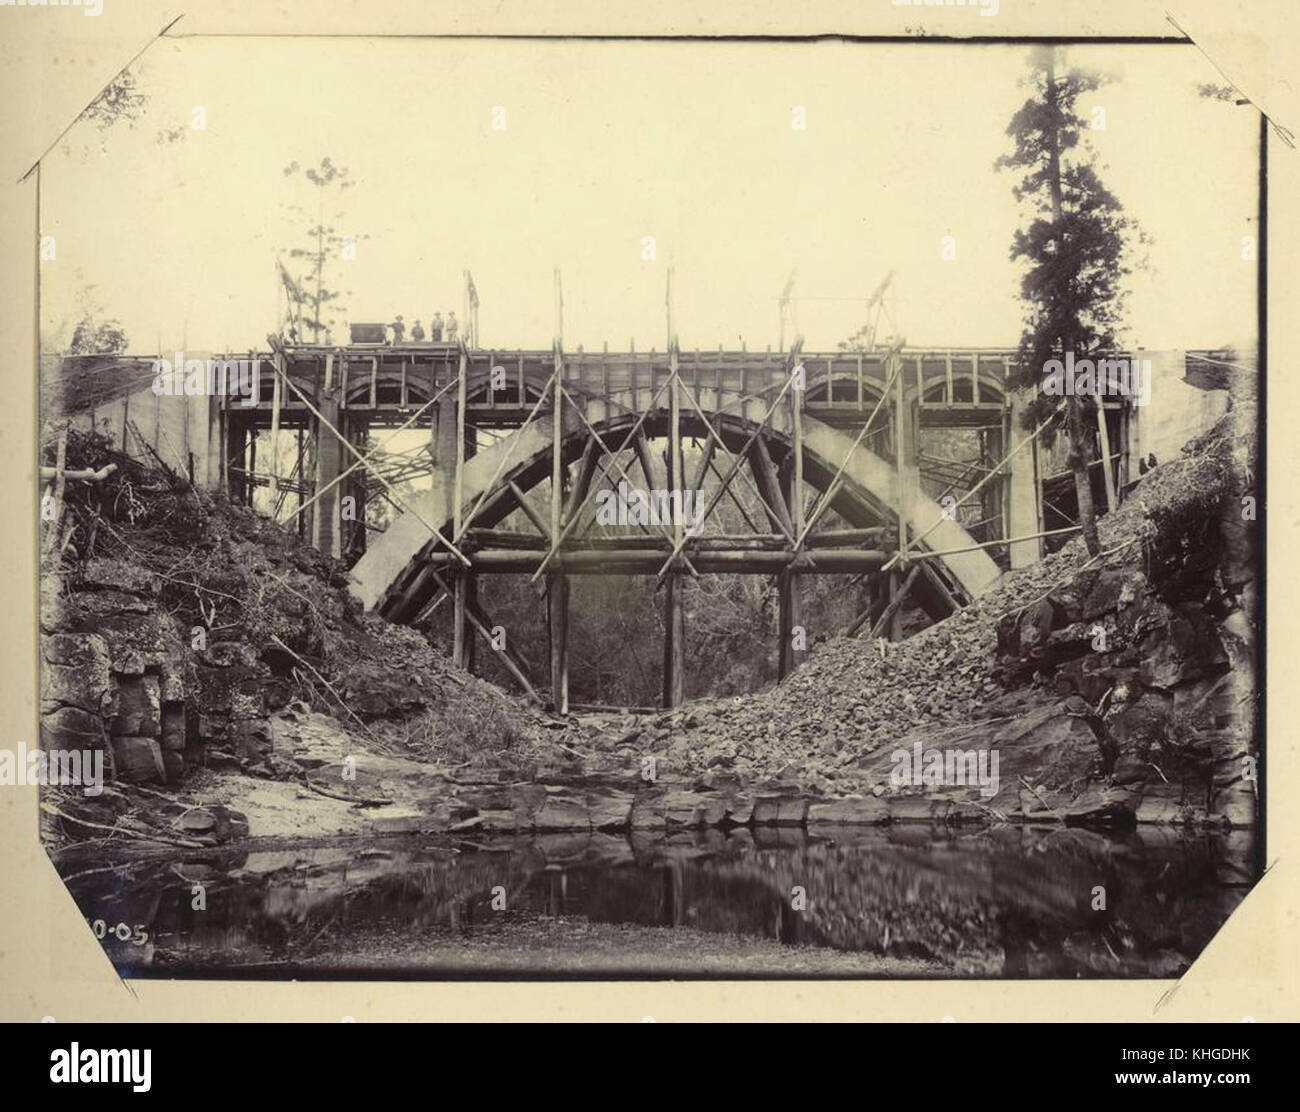 2 255930 Deep Creek ponte ferroviario in via di completamento, Gayndah district, 1905 Foto Stock